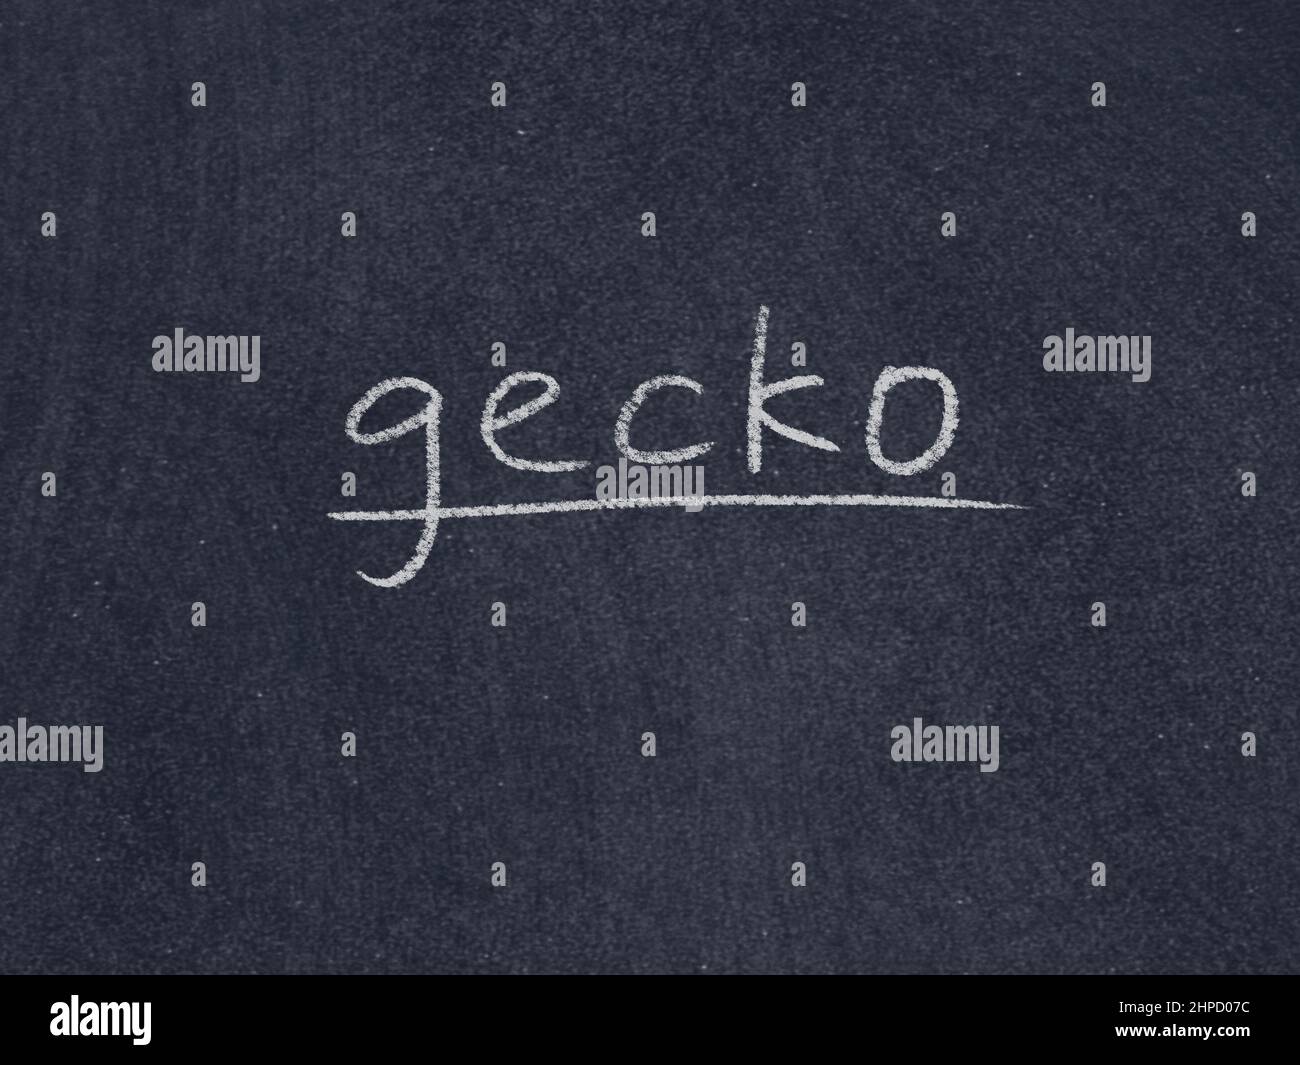 gecko concept word on blackboard background Stock Photo